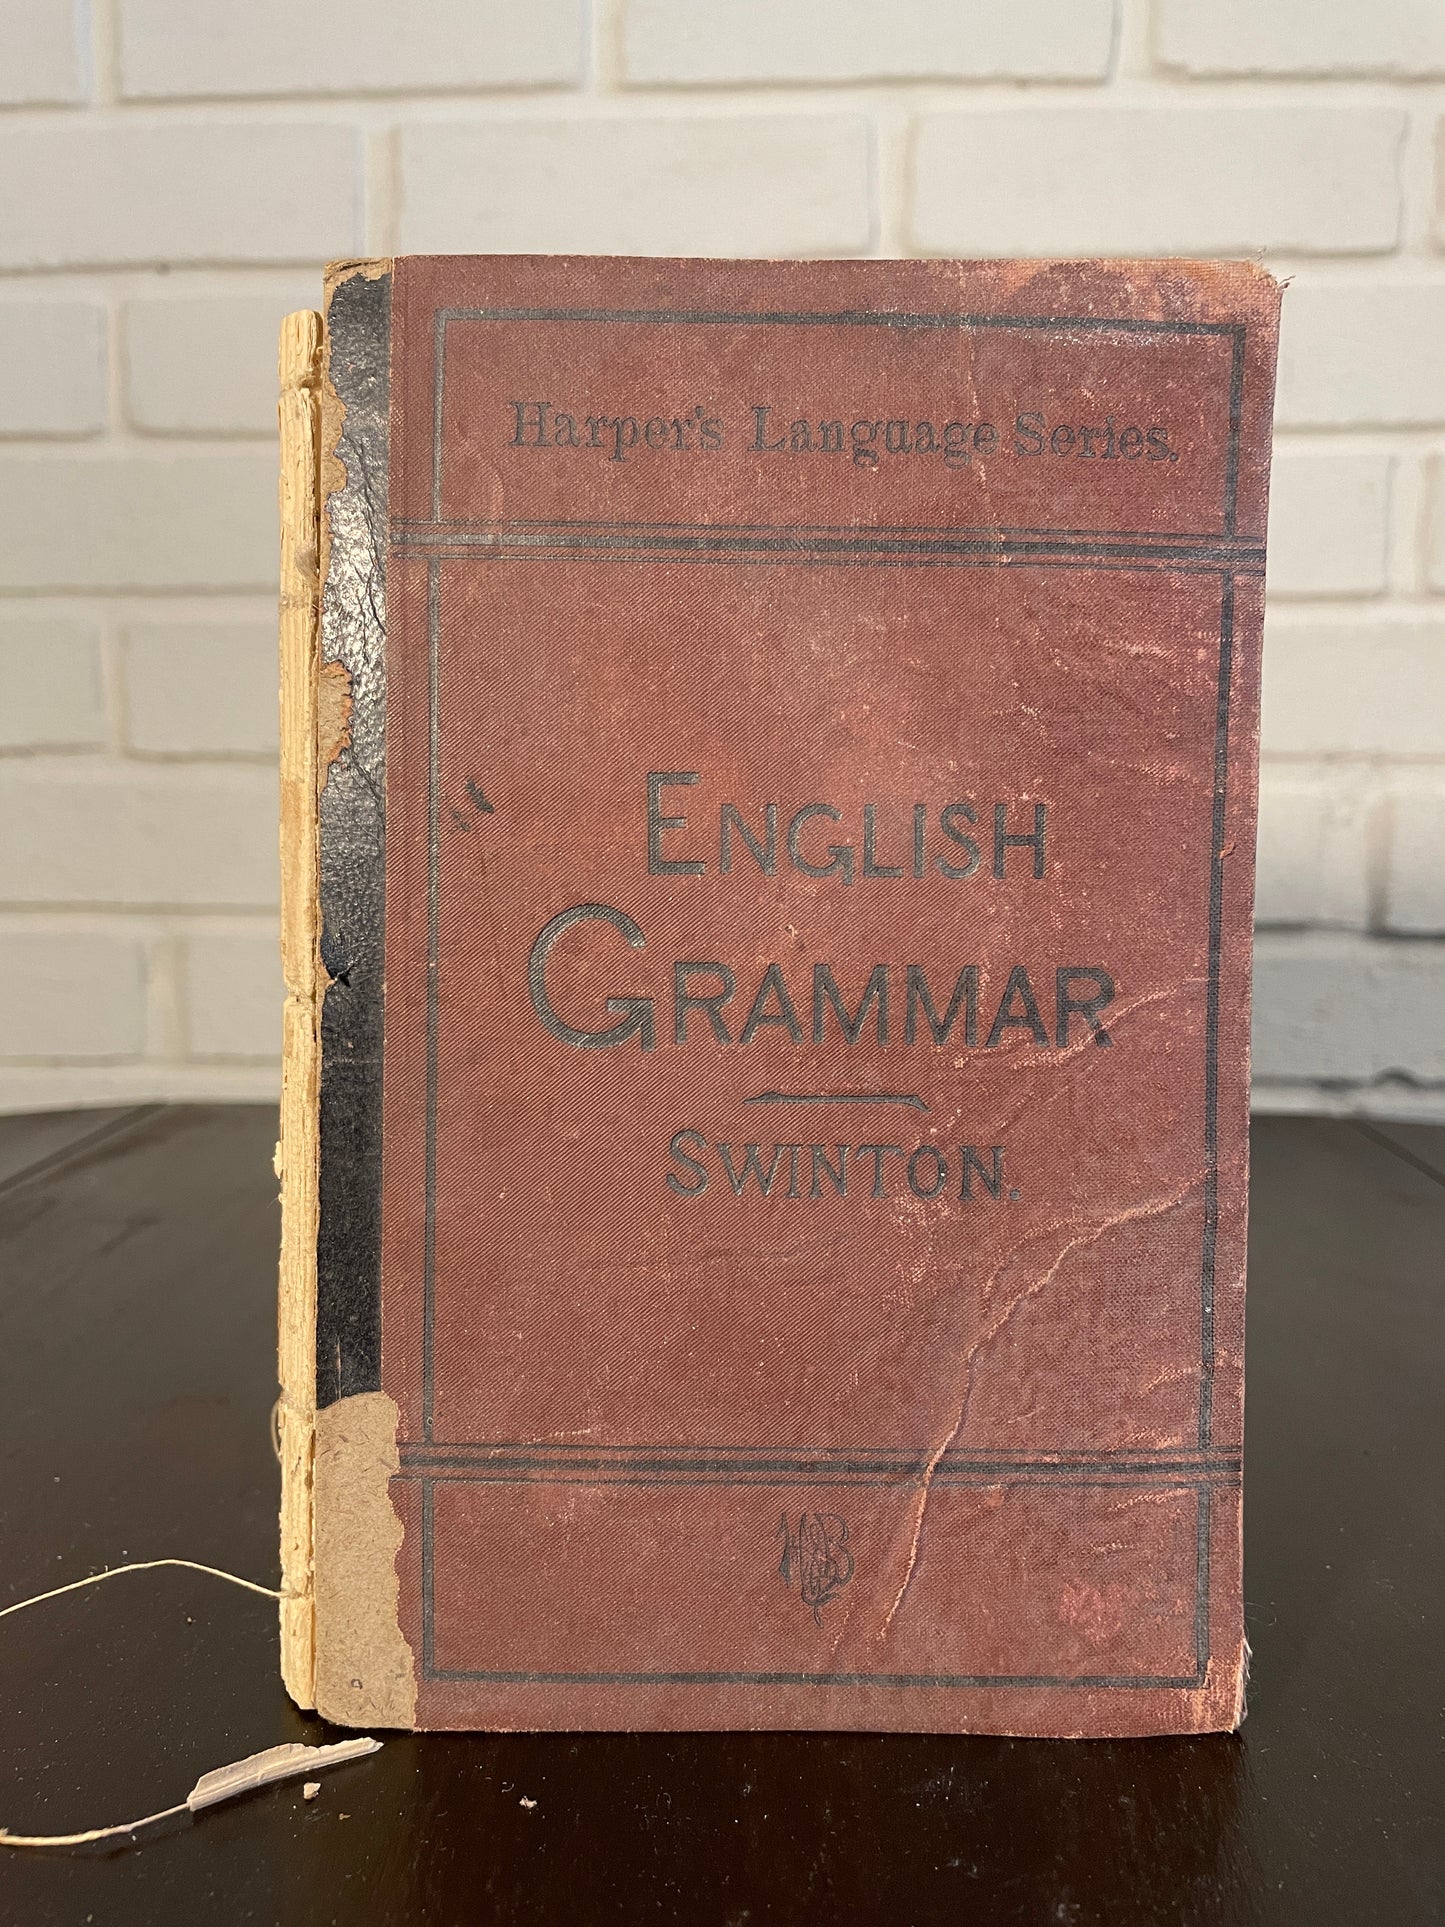 Harpers Language Series English Grammar by William Swinton, 1880